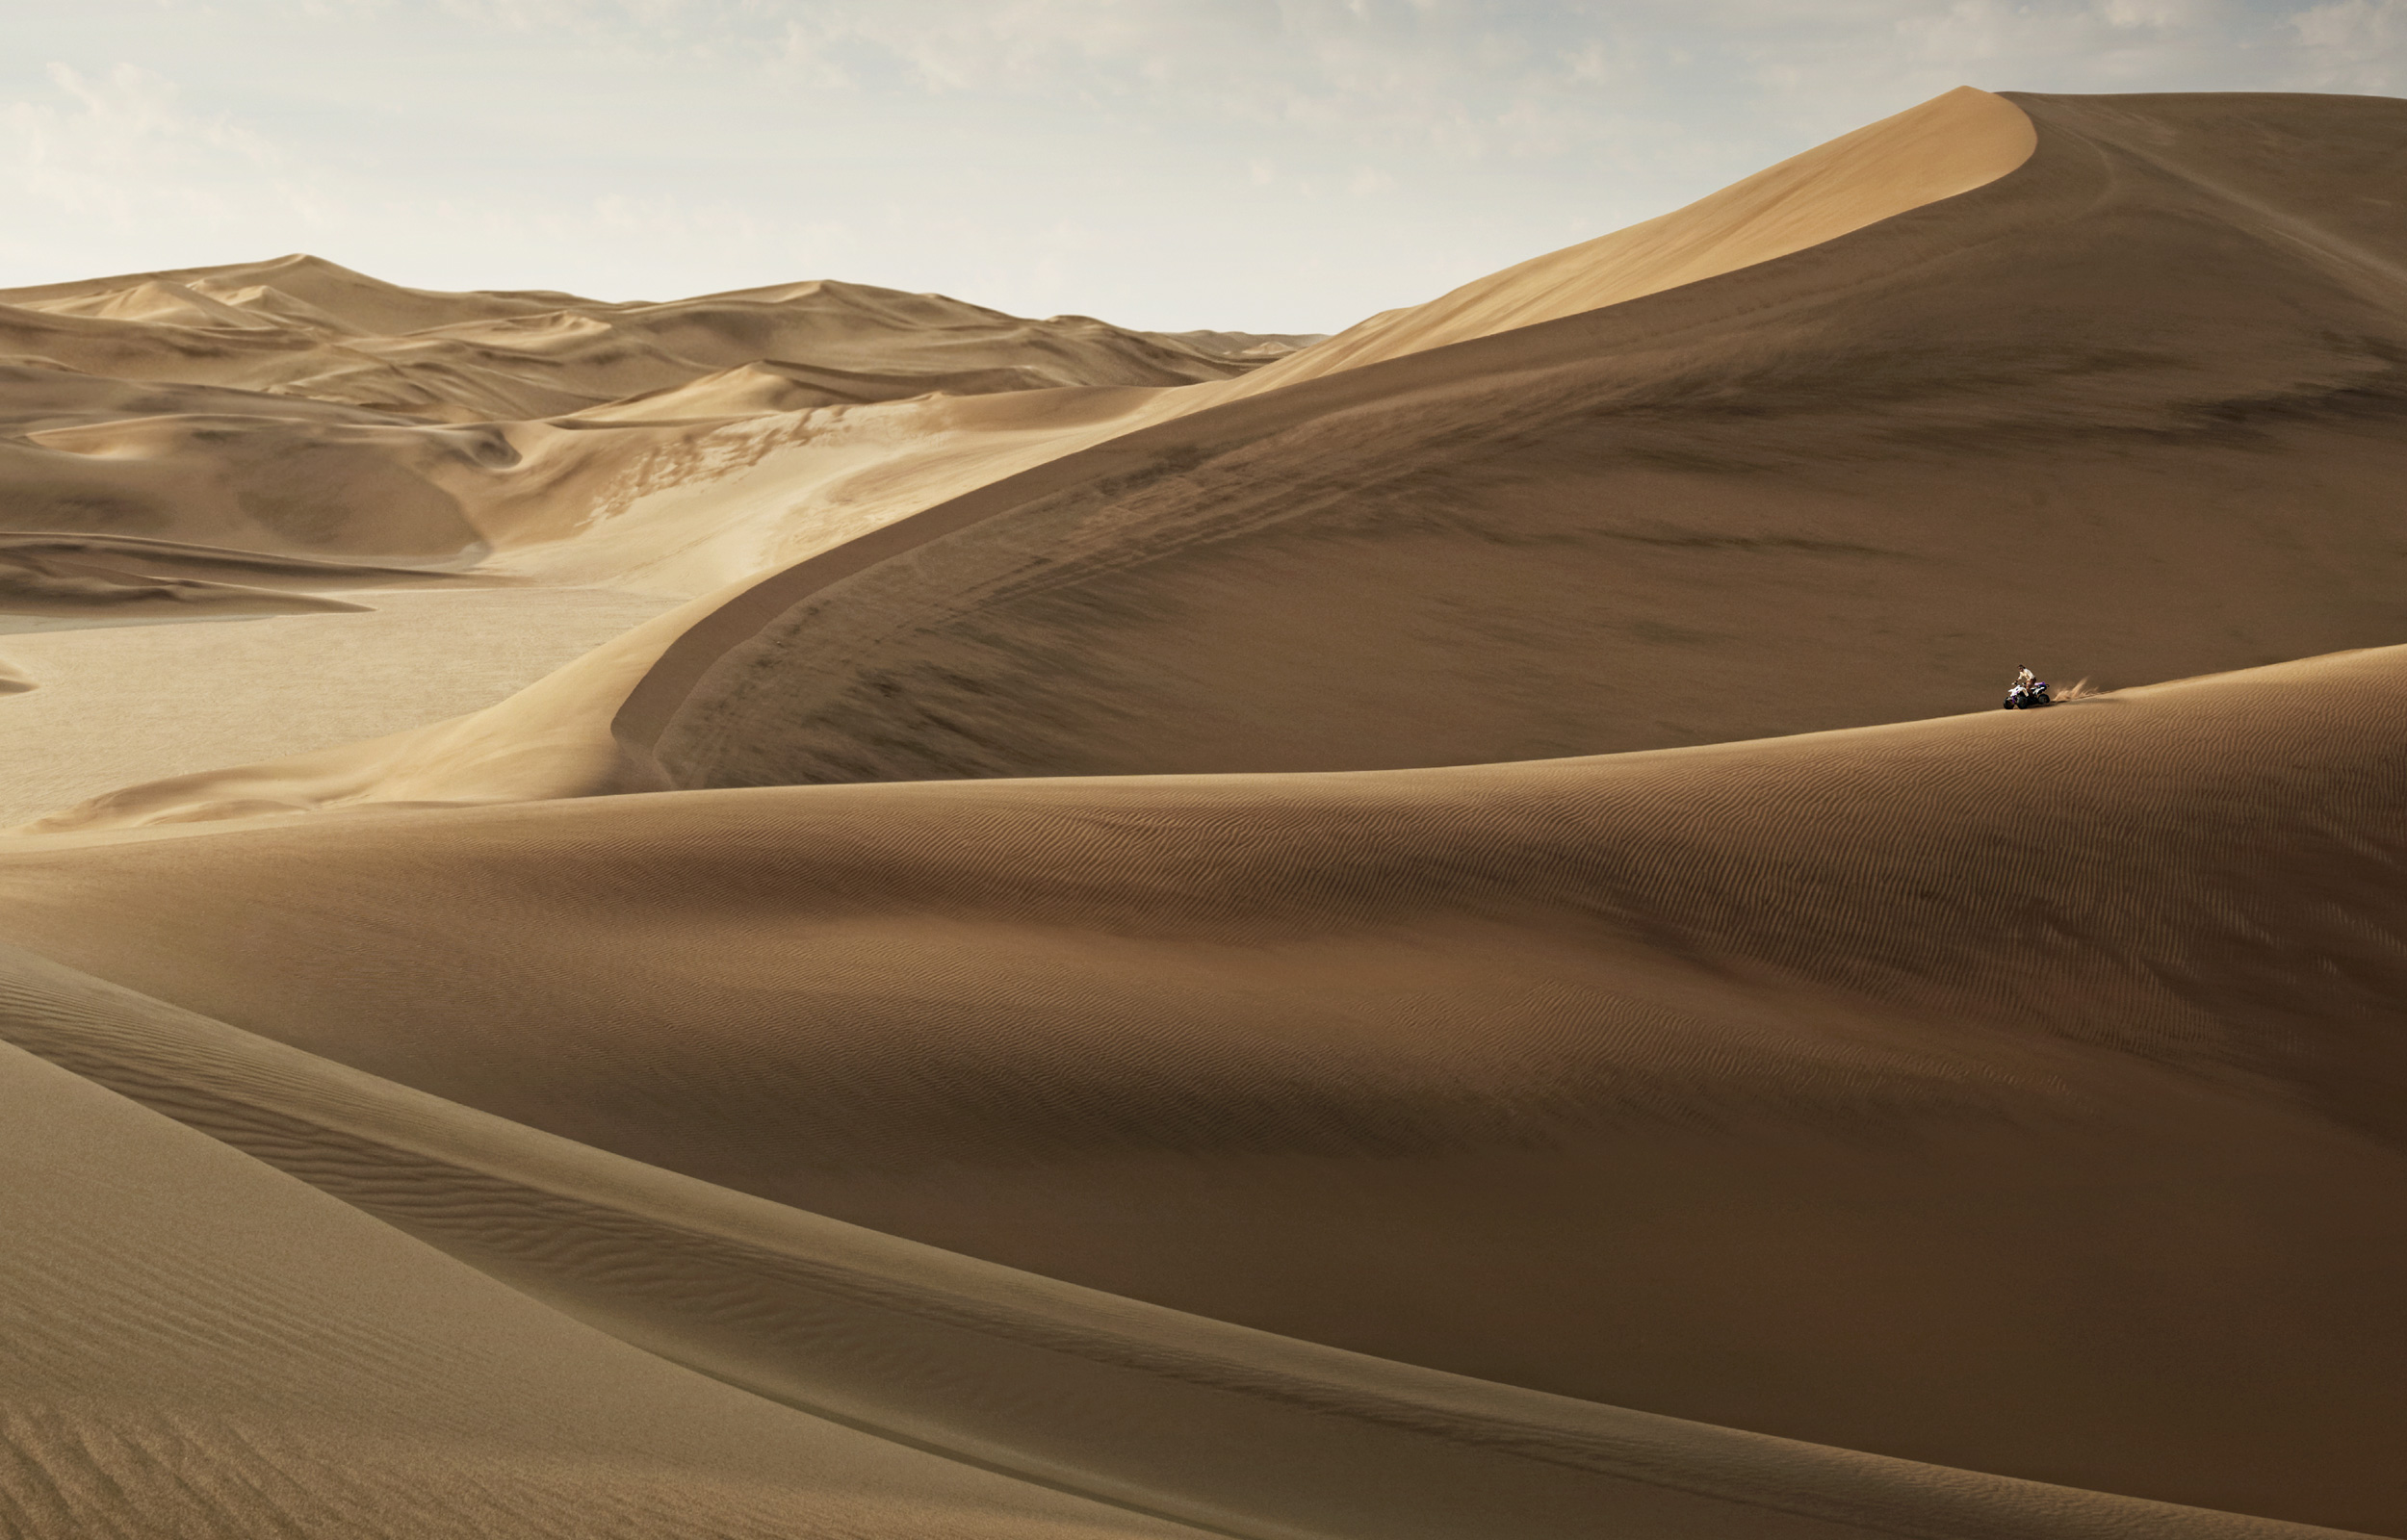 Namibia dunes (photograph by Jez matthews)